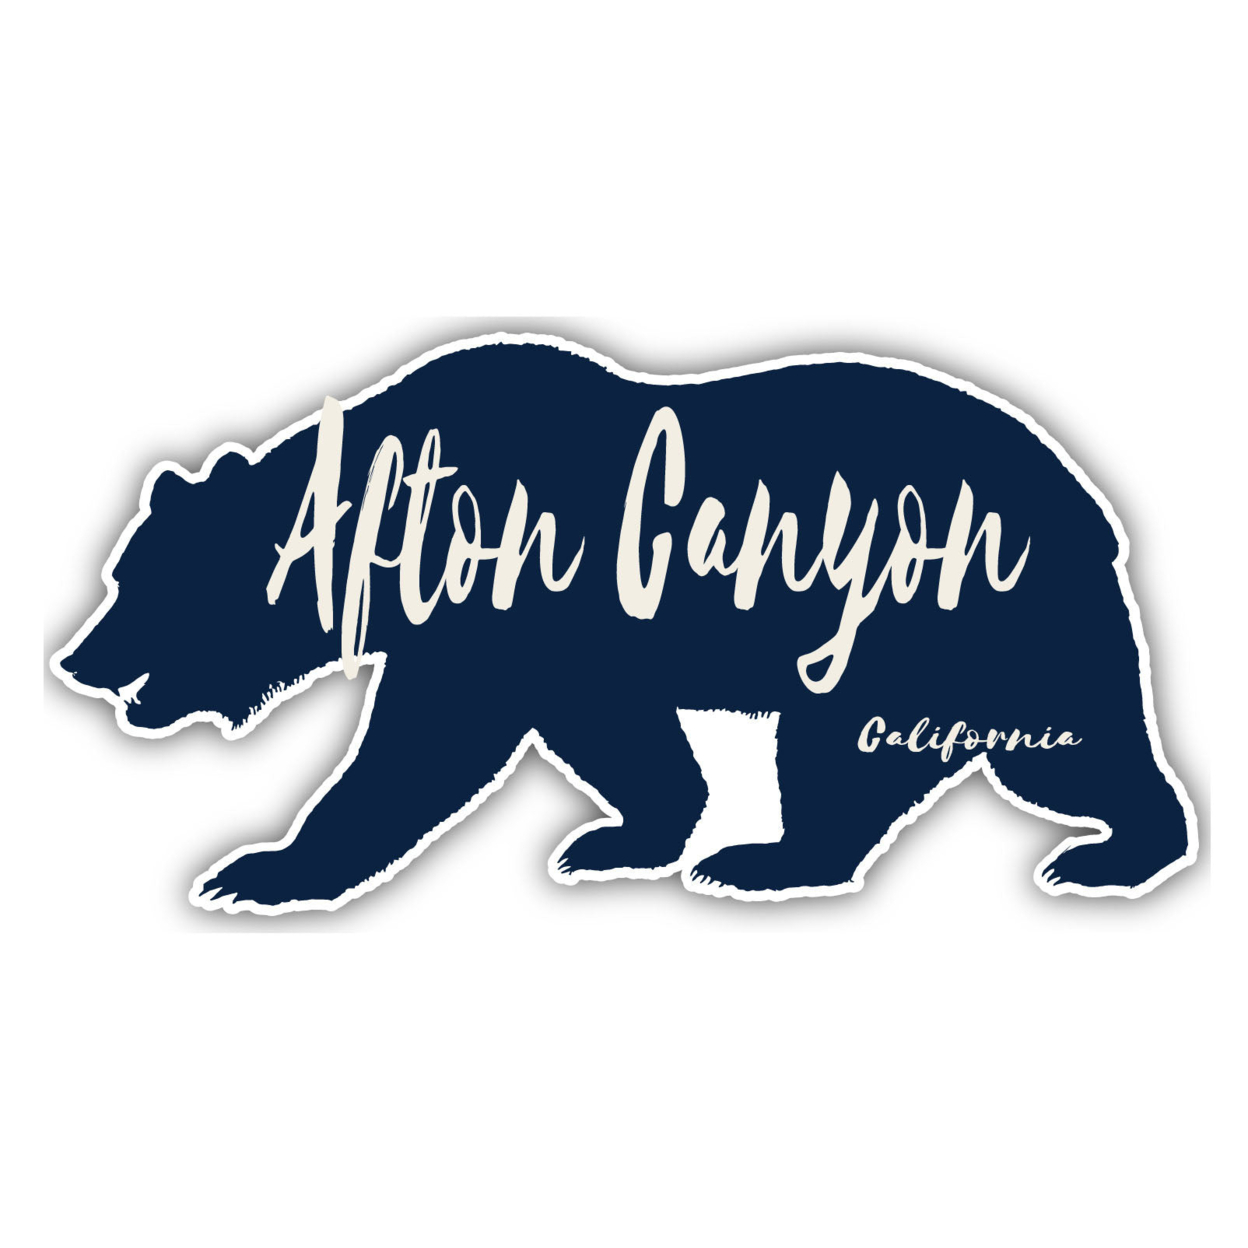 Afton Canyon California Souvenir Decorative Stickers (Choose Theme And Size) - Single Unit, 8-Inch, Bear